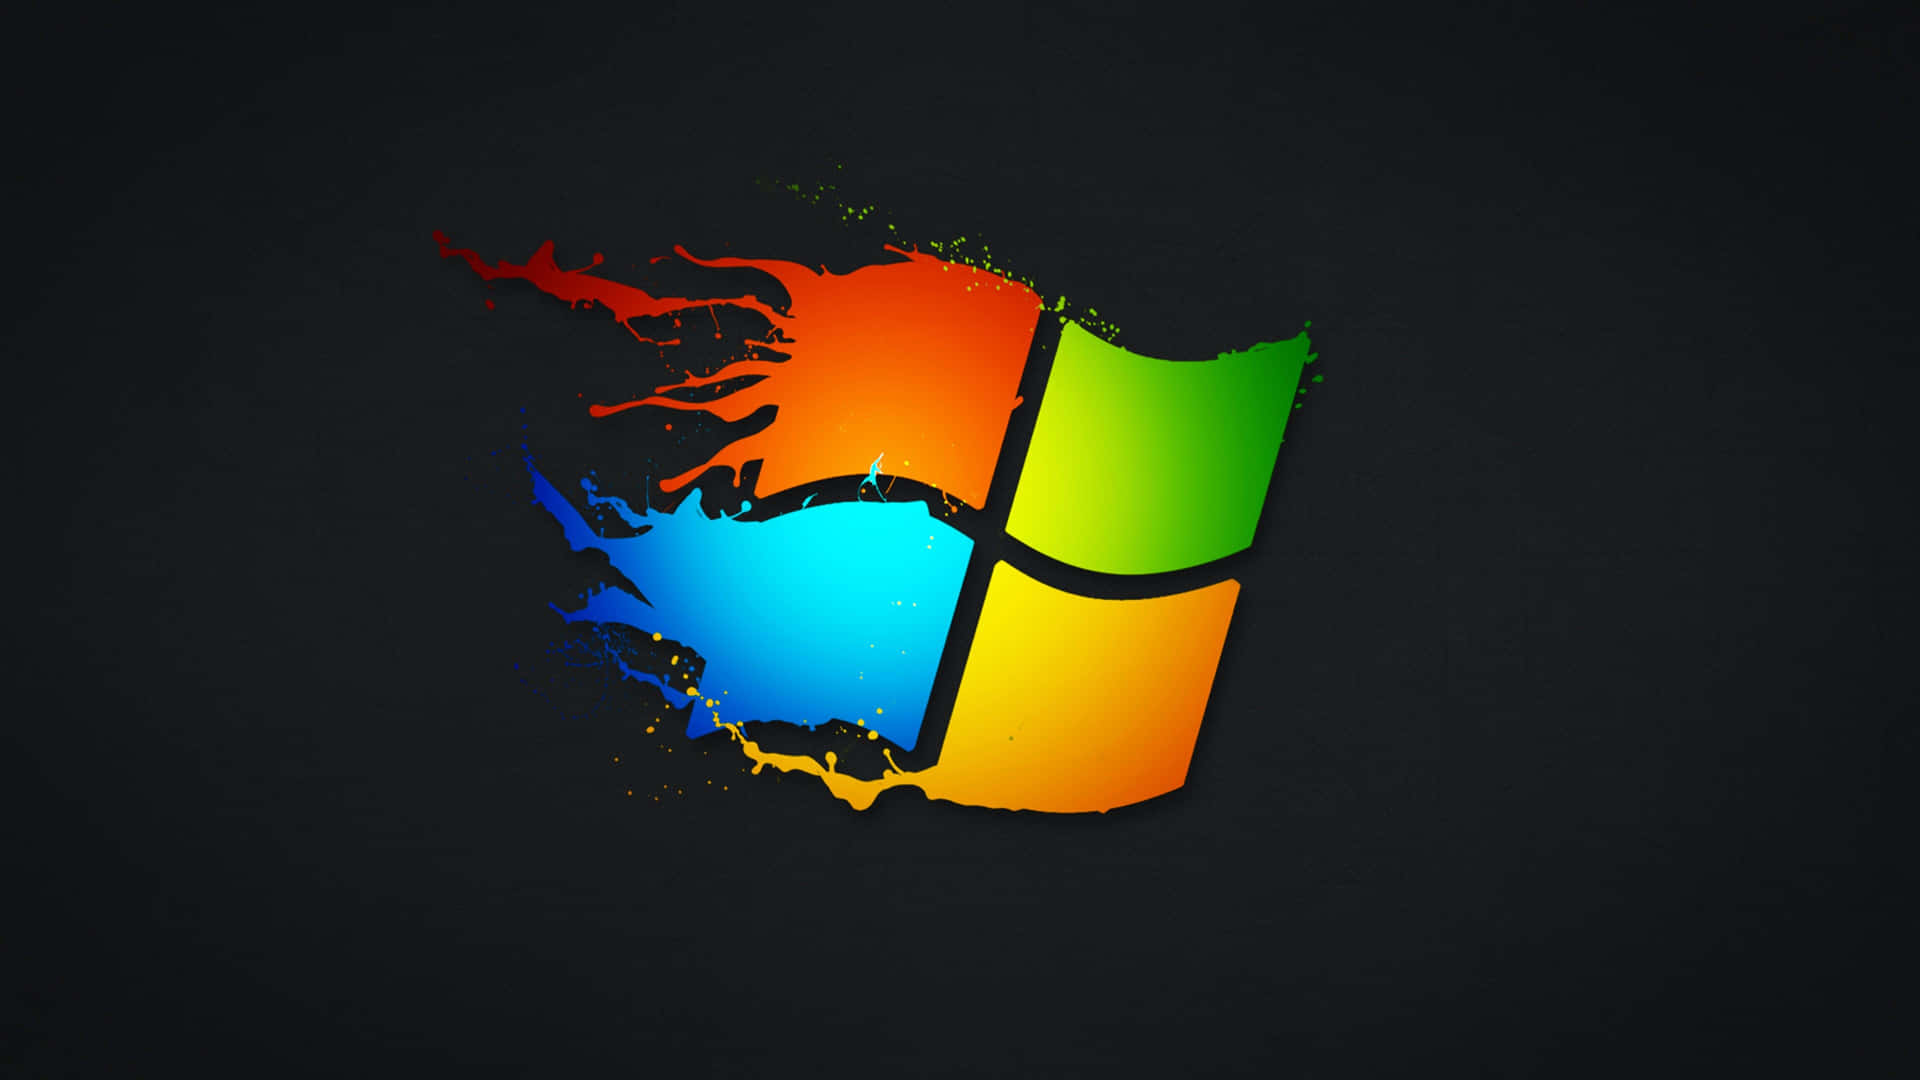 47+] Windows 10 Logo Wallpaper 1920x1080 - WallpaperSafari